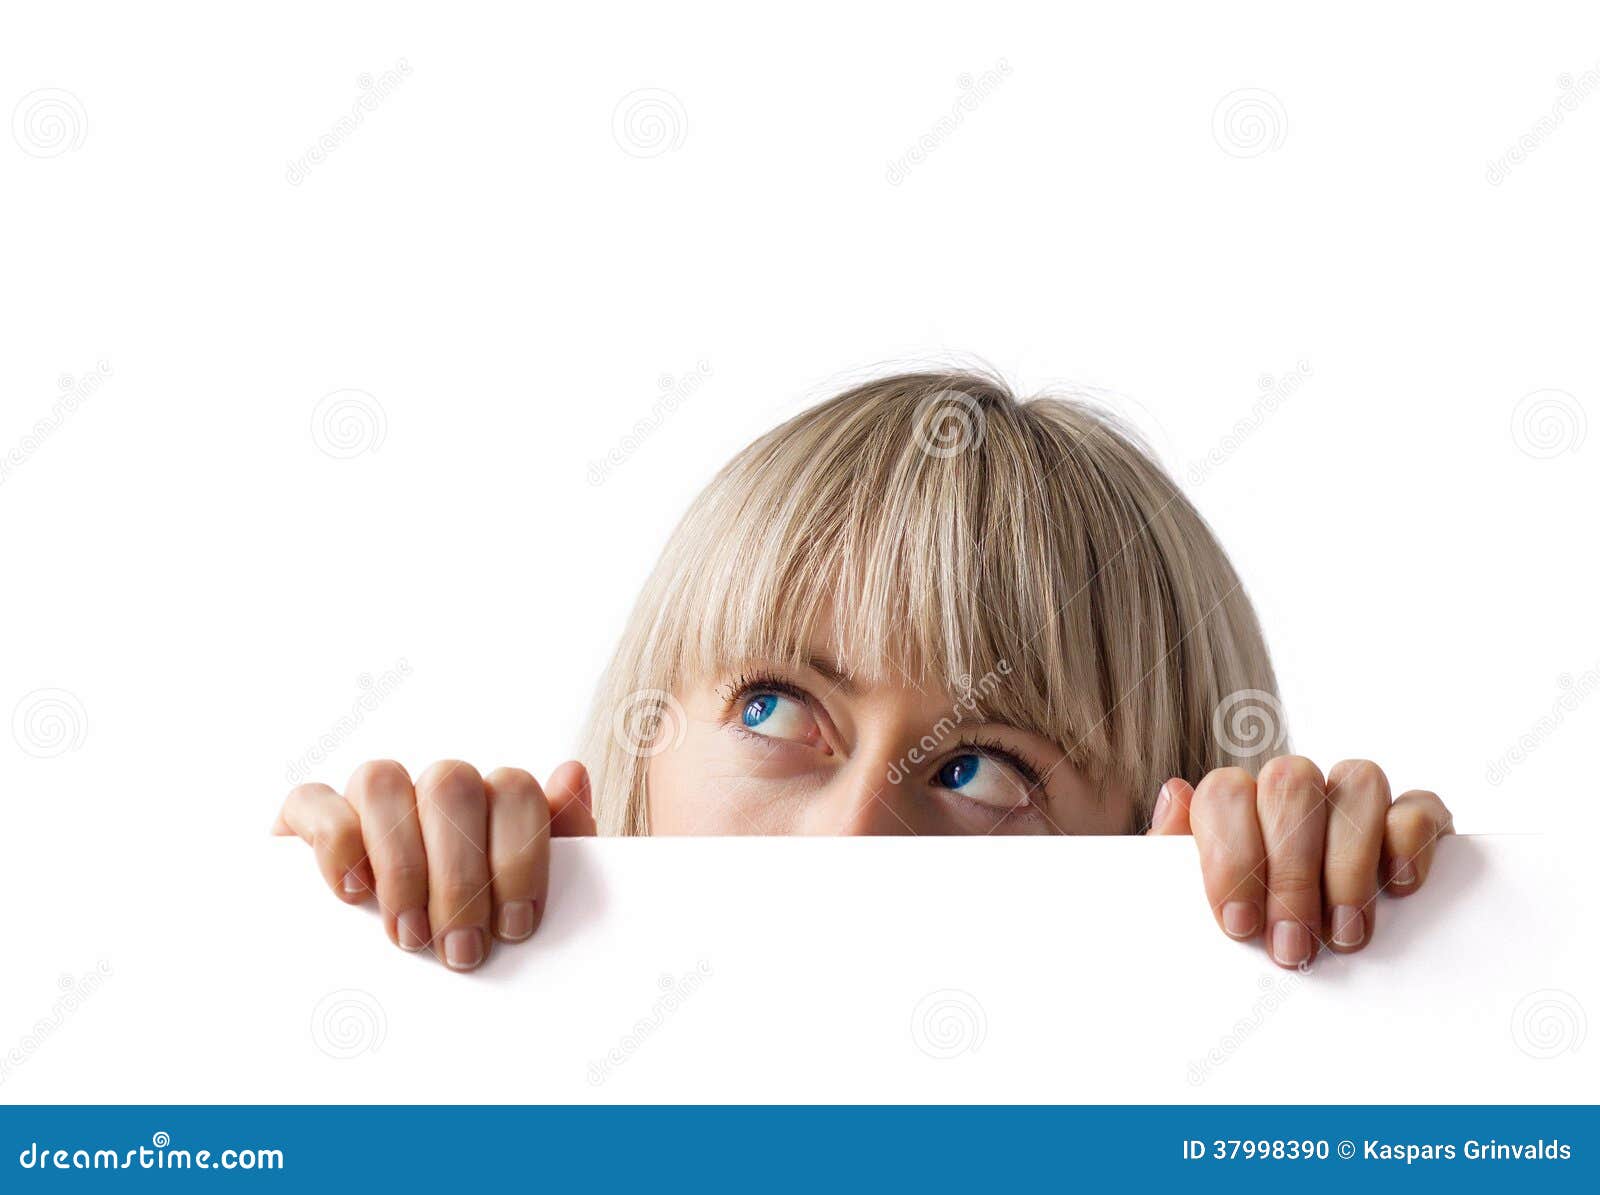 woman hiding behind blank white board